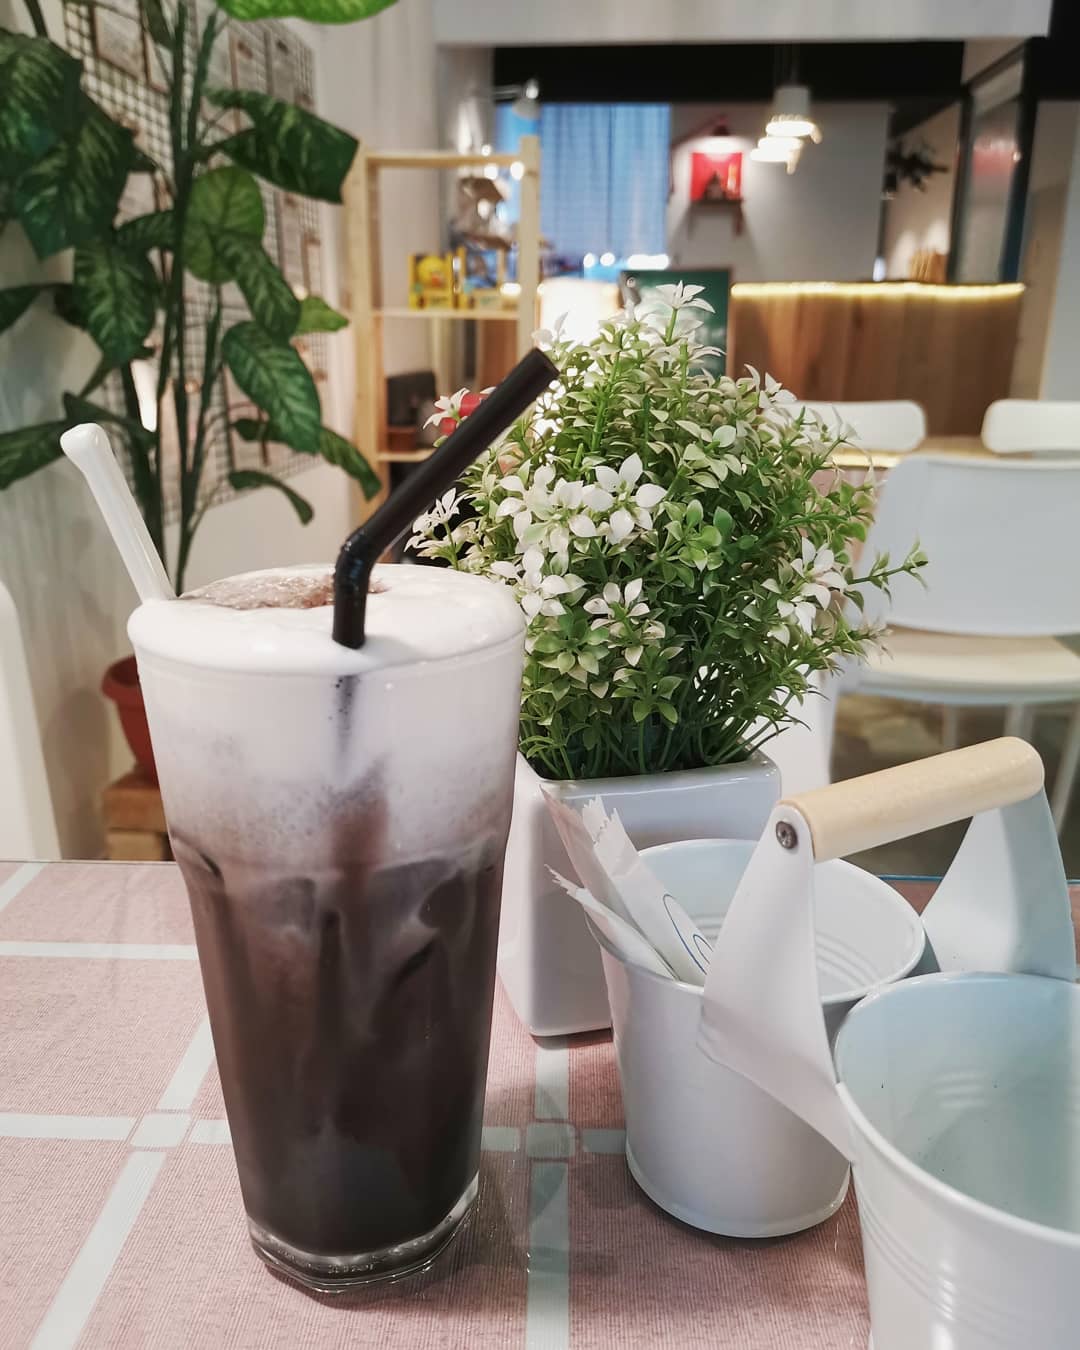 Aries Coffee House (白牧羊咖啡屋) - Drink